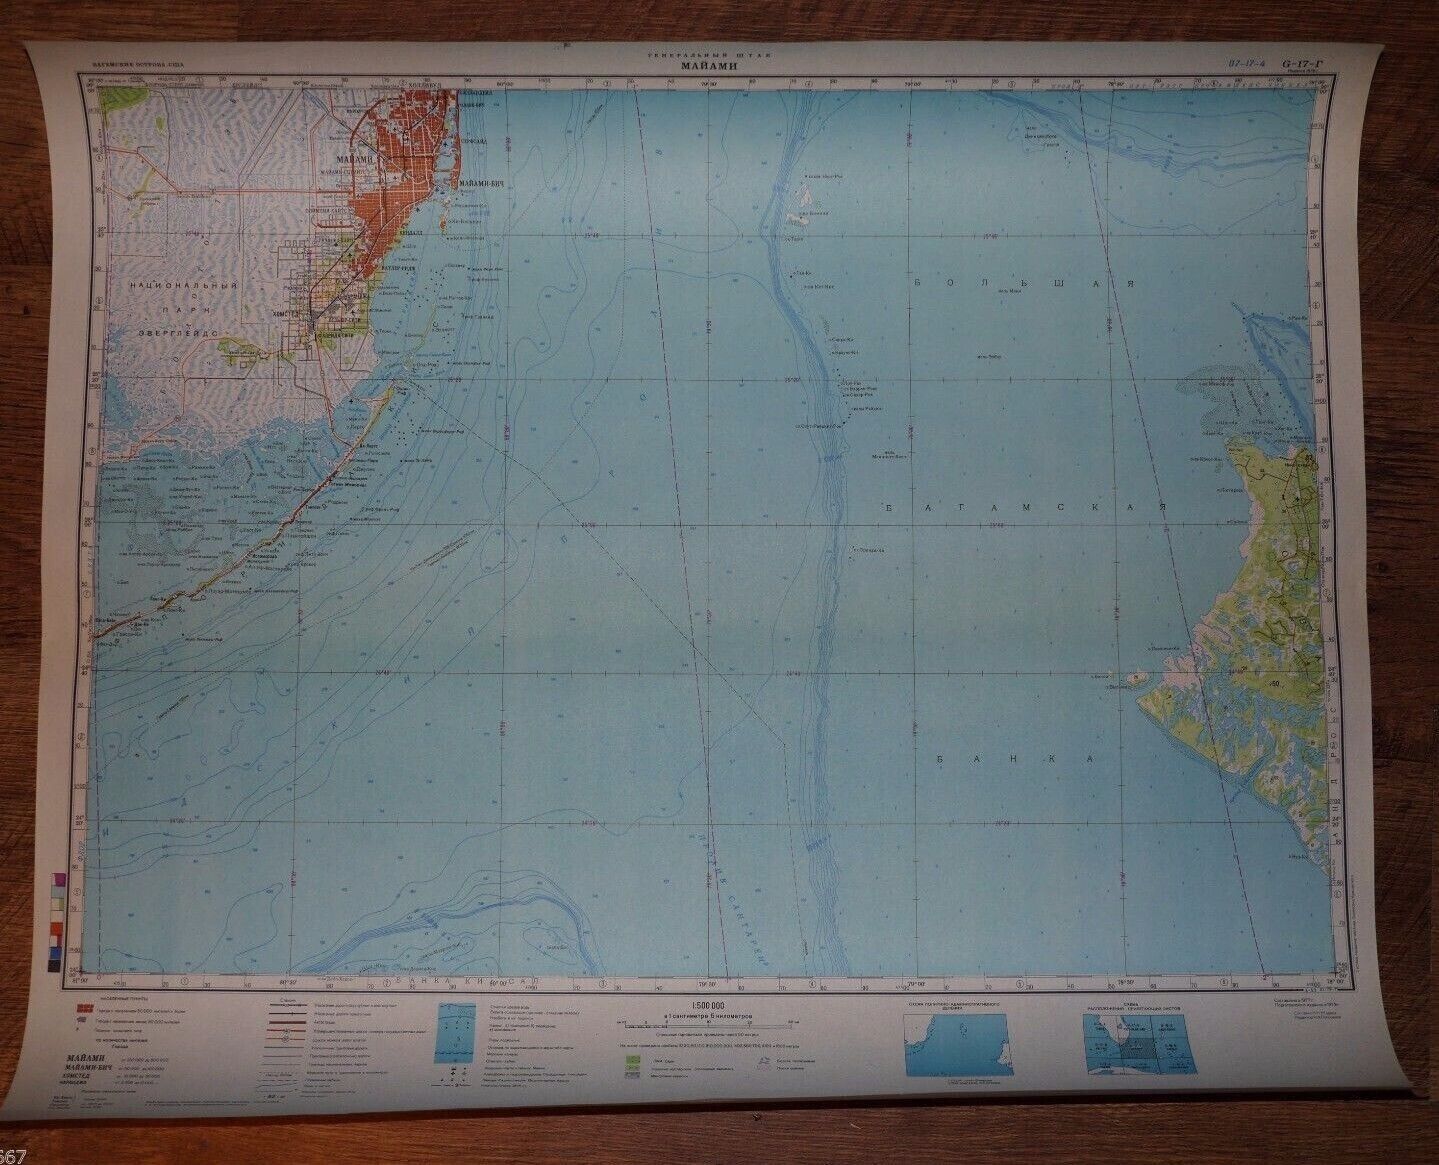 Authentic TOP SECRET Soviet Army Military Topographic Map Miami, Florida USA